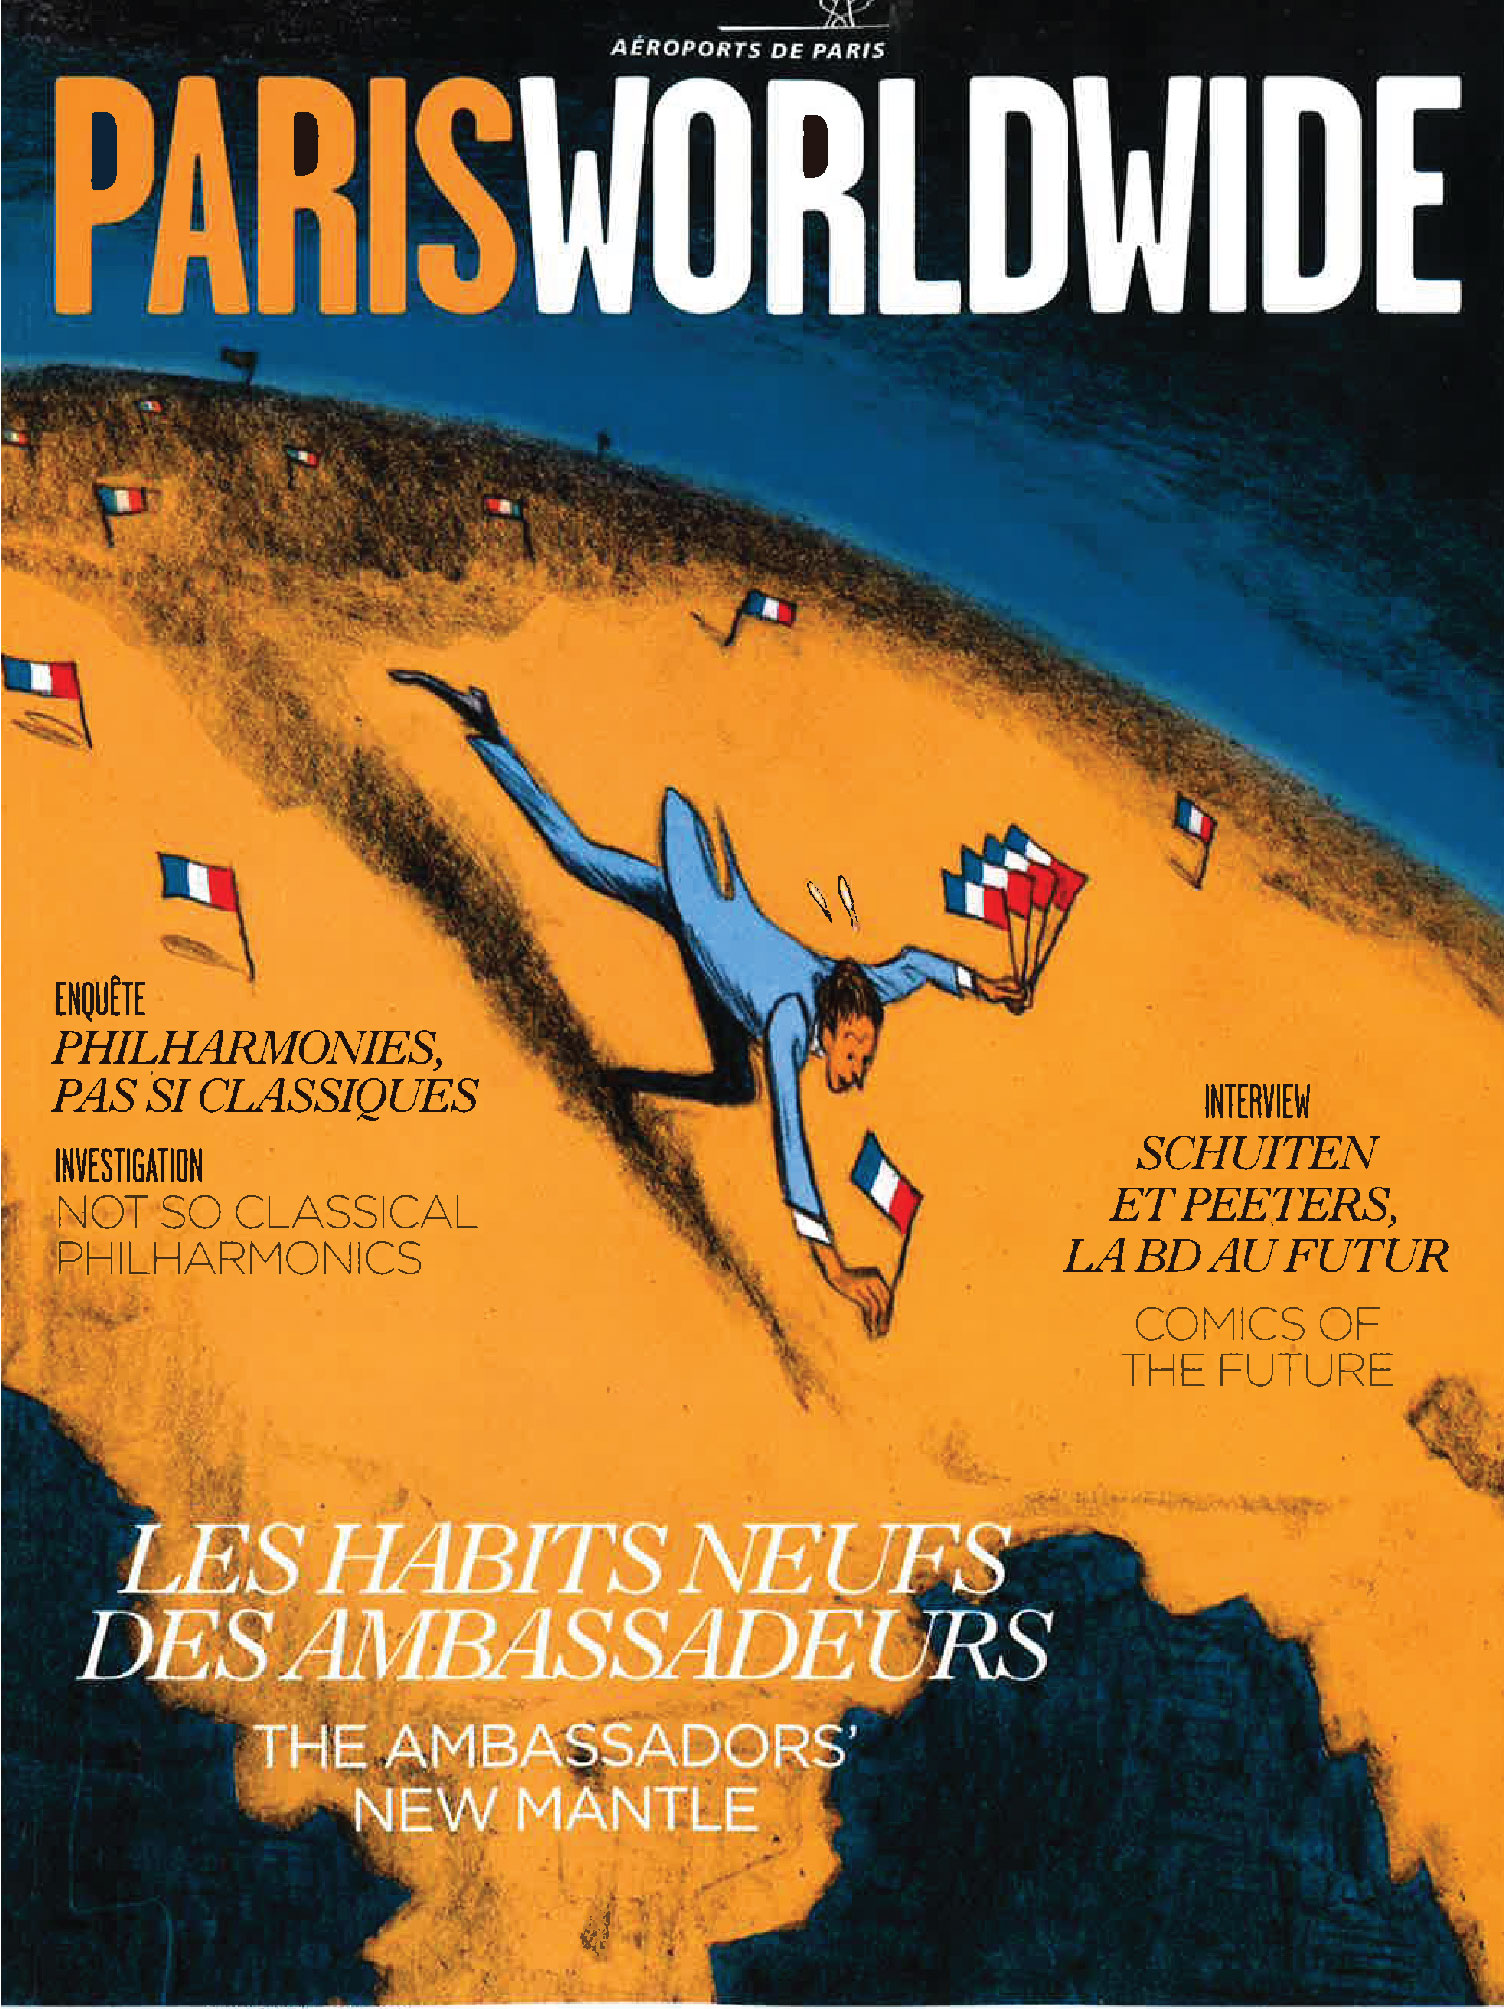 cover of the magazine aeroport de paris